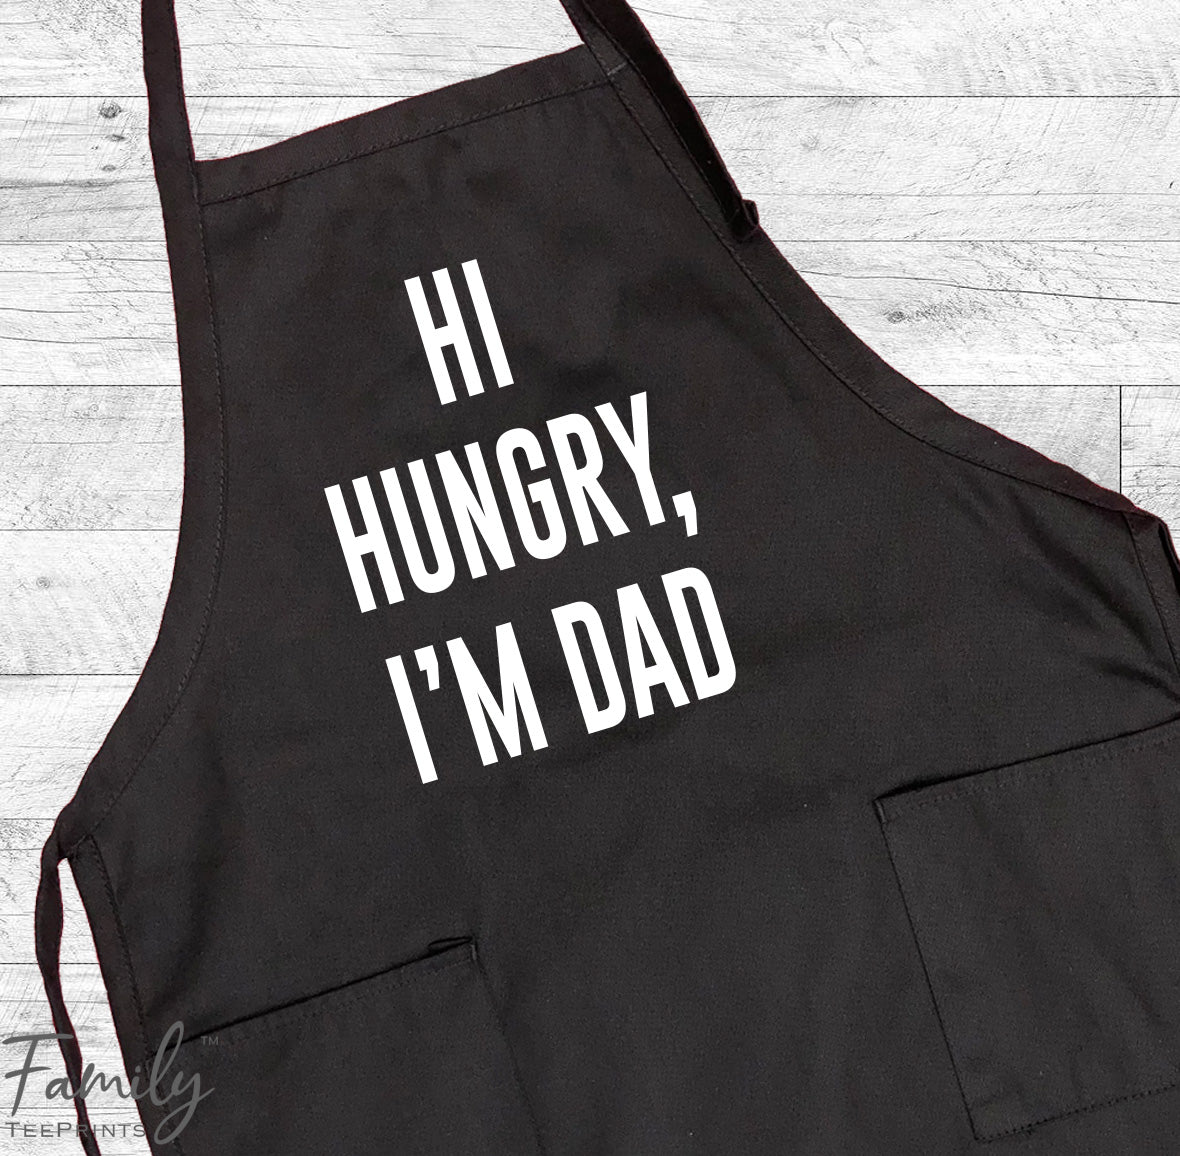 Hi Hungry, I'm Dad - Grill Apron - Funny Dad Apron - Funny Grill Apron - familyteeprints